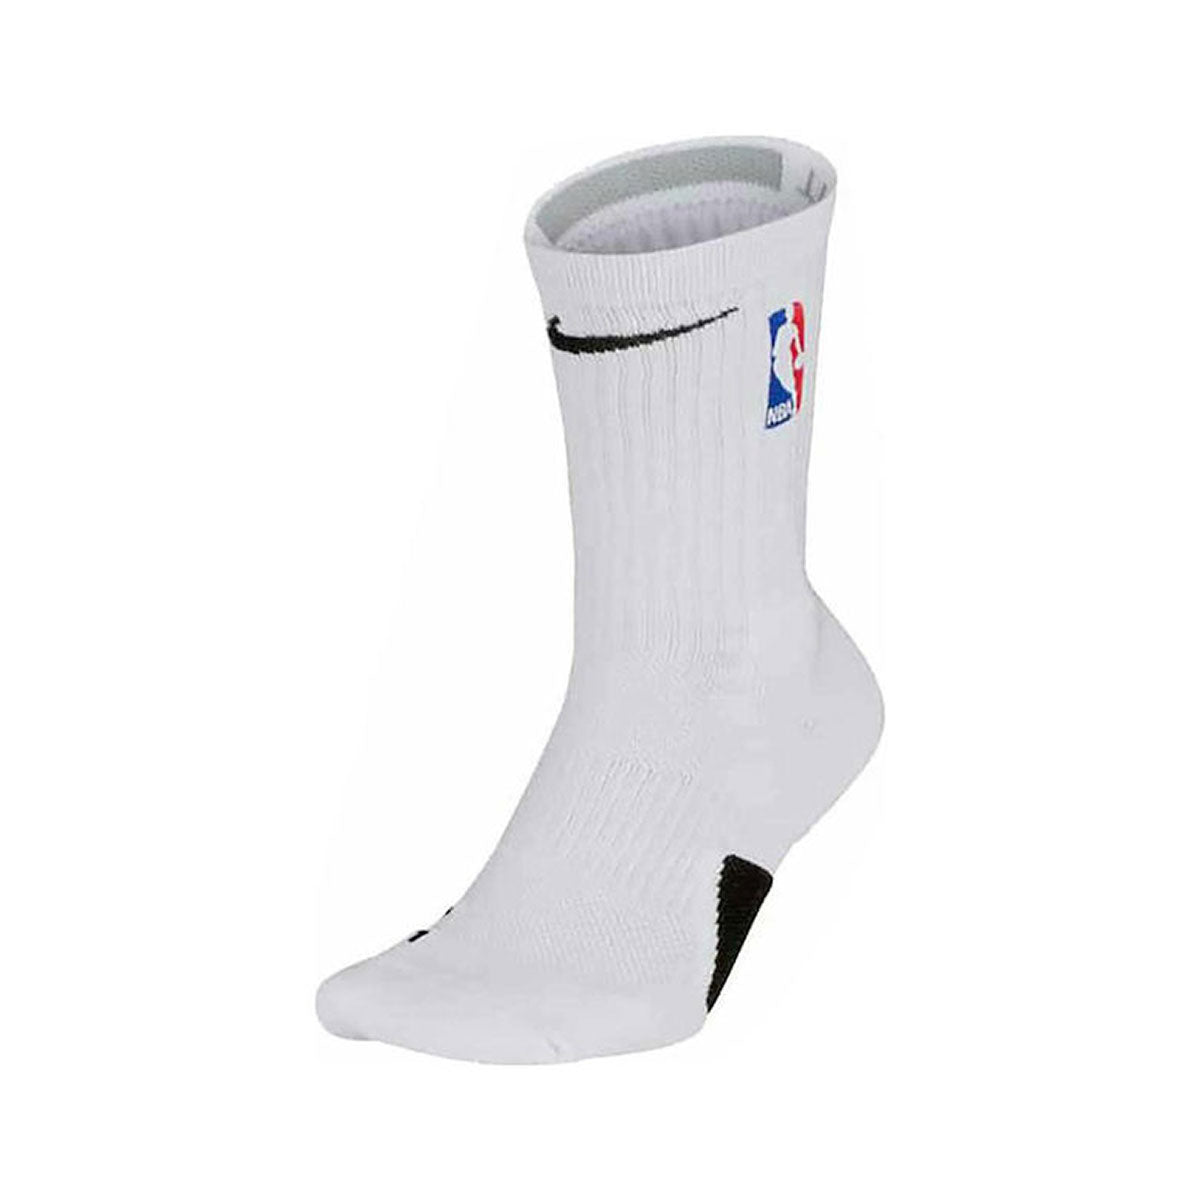 Nike NBA Elite Crew Socks